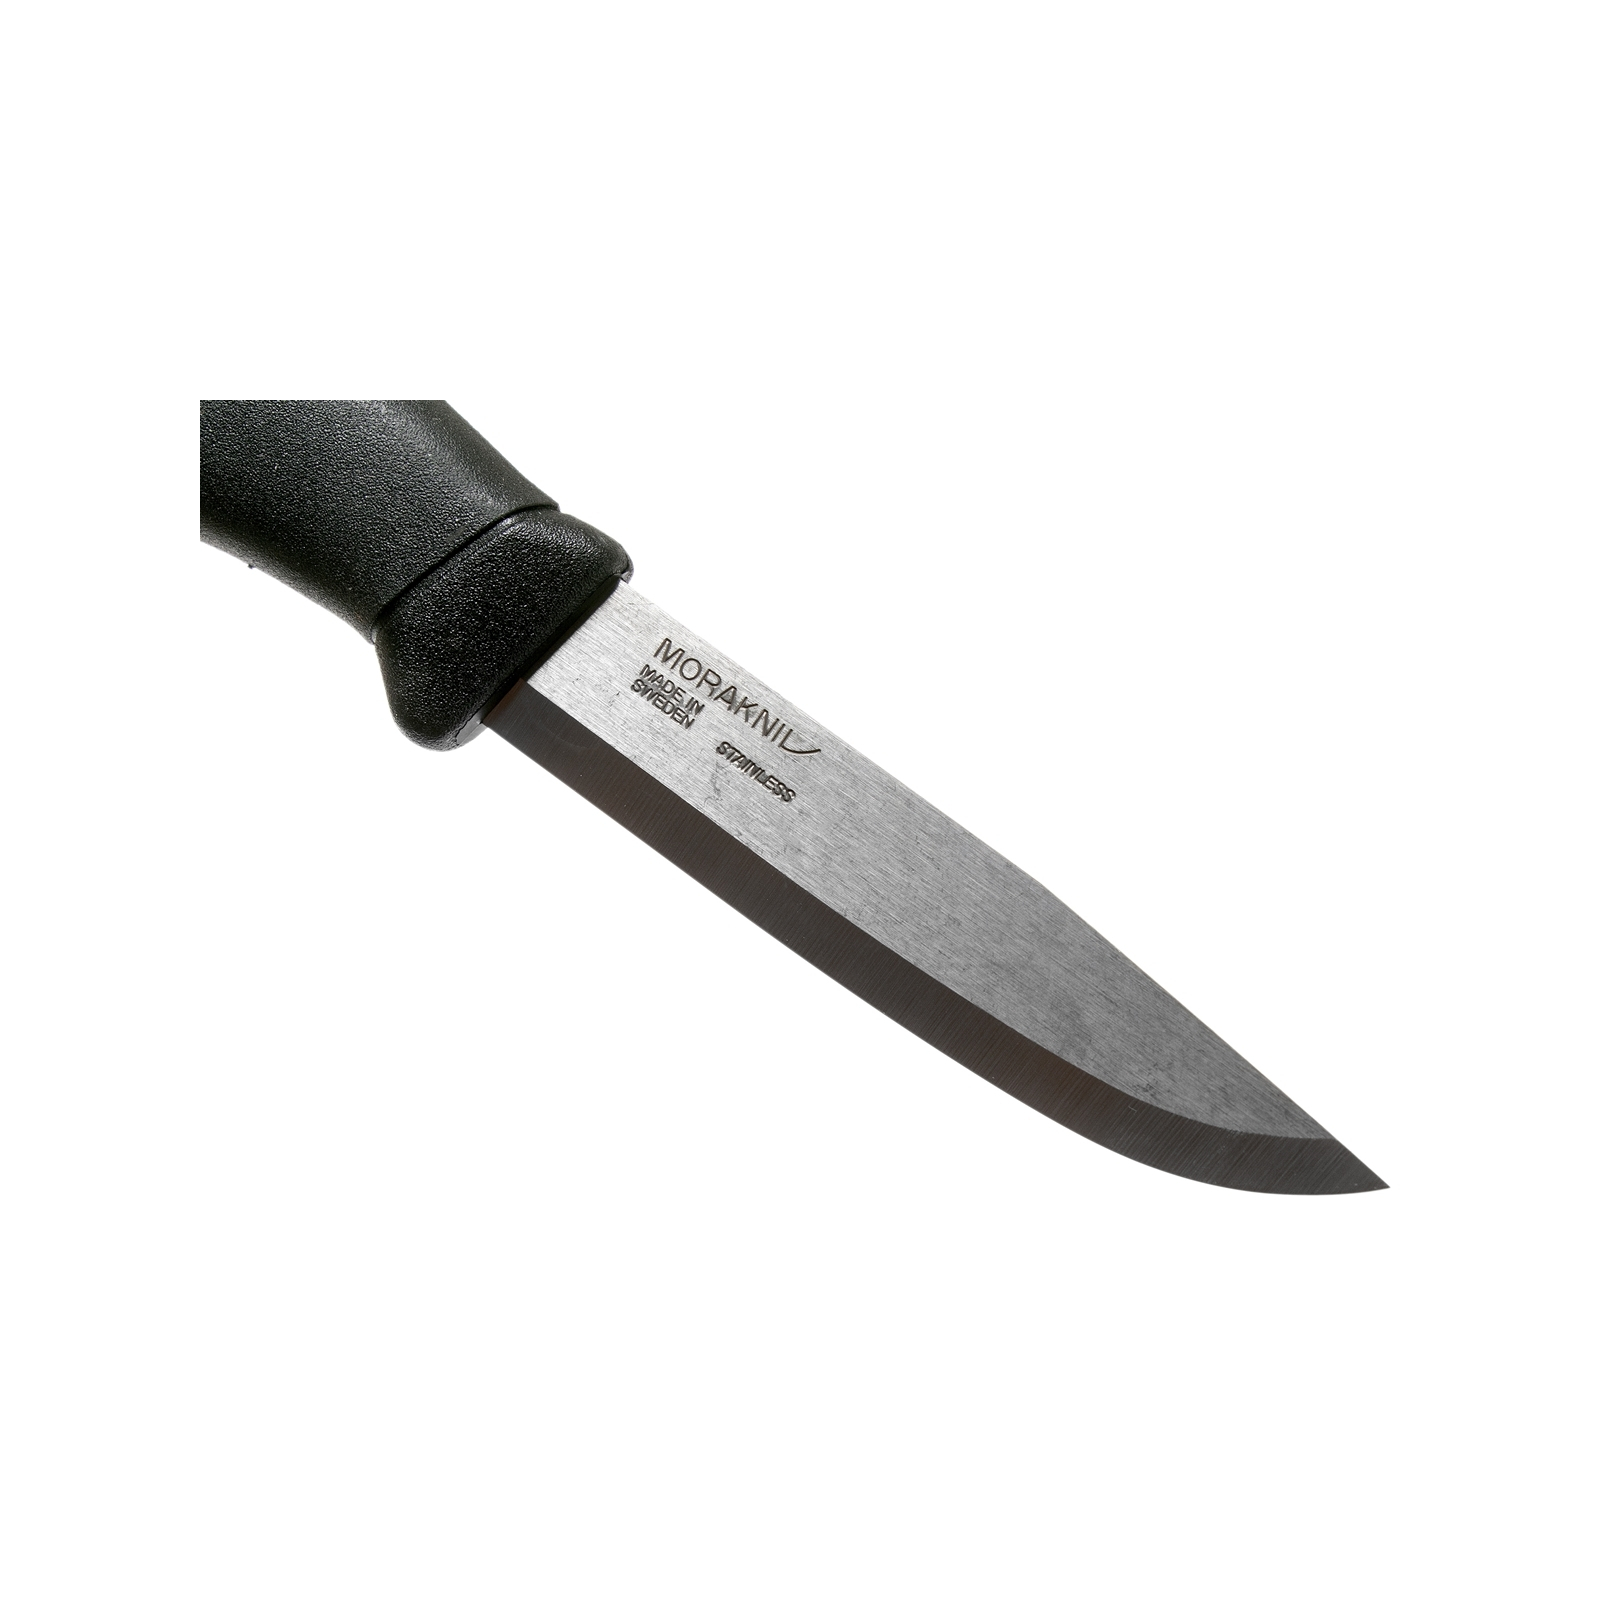 Нож Morakniv Companion Spark Black stainless steel (13567) изображение 3